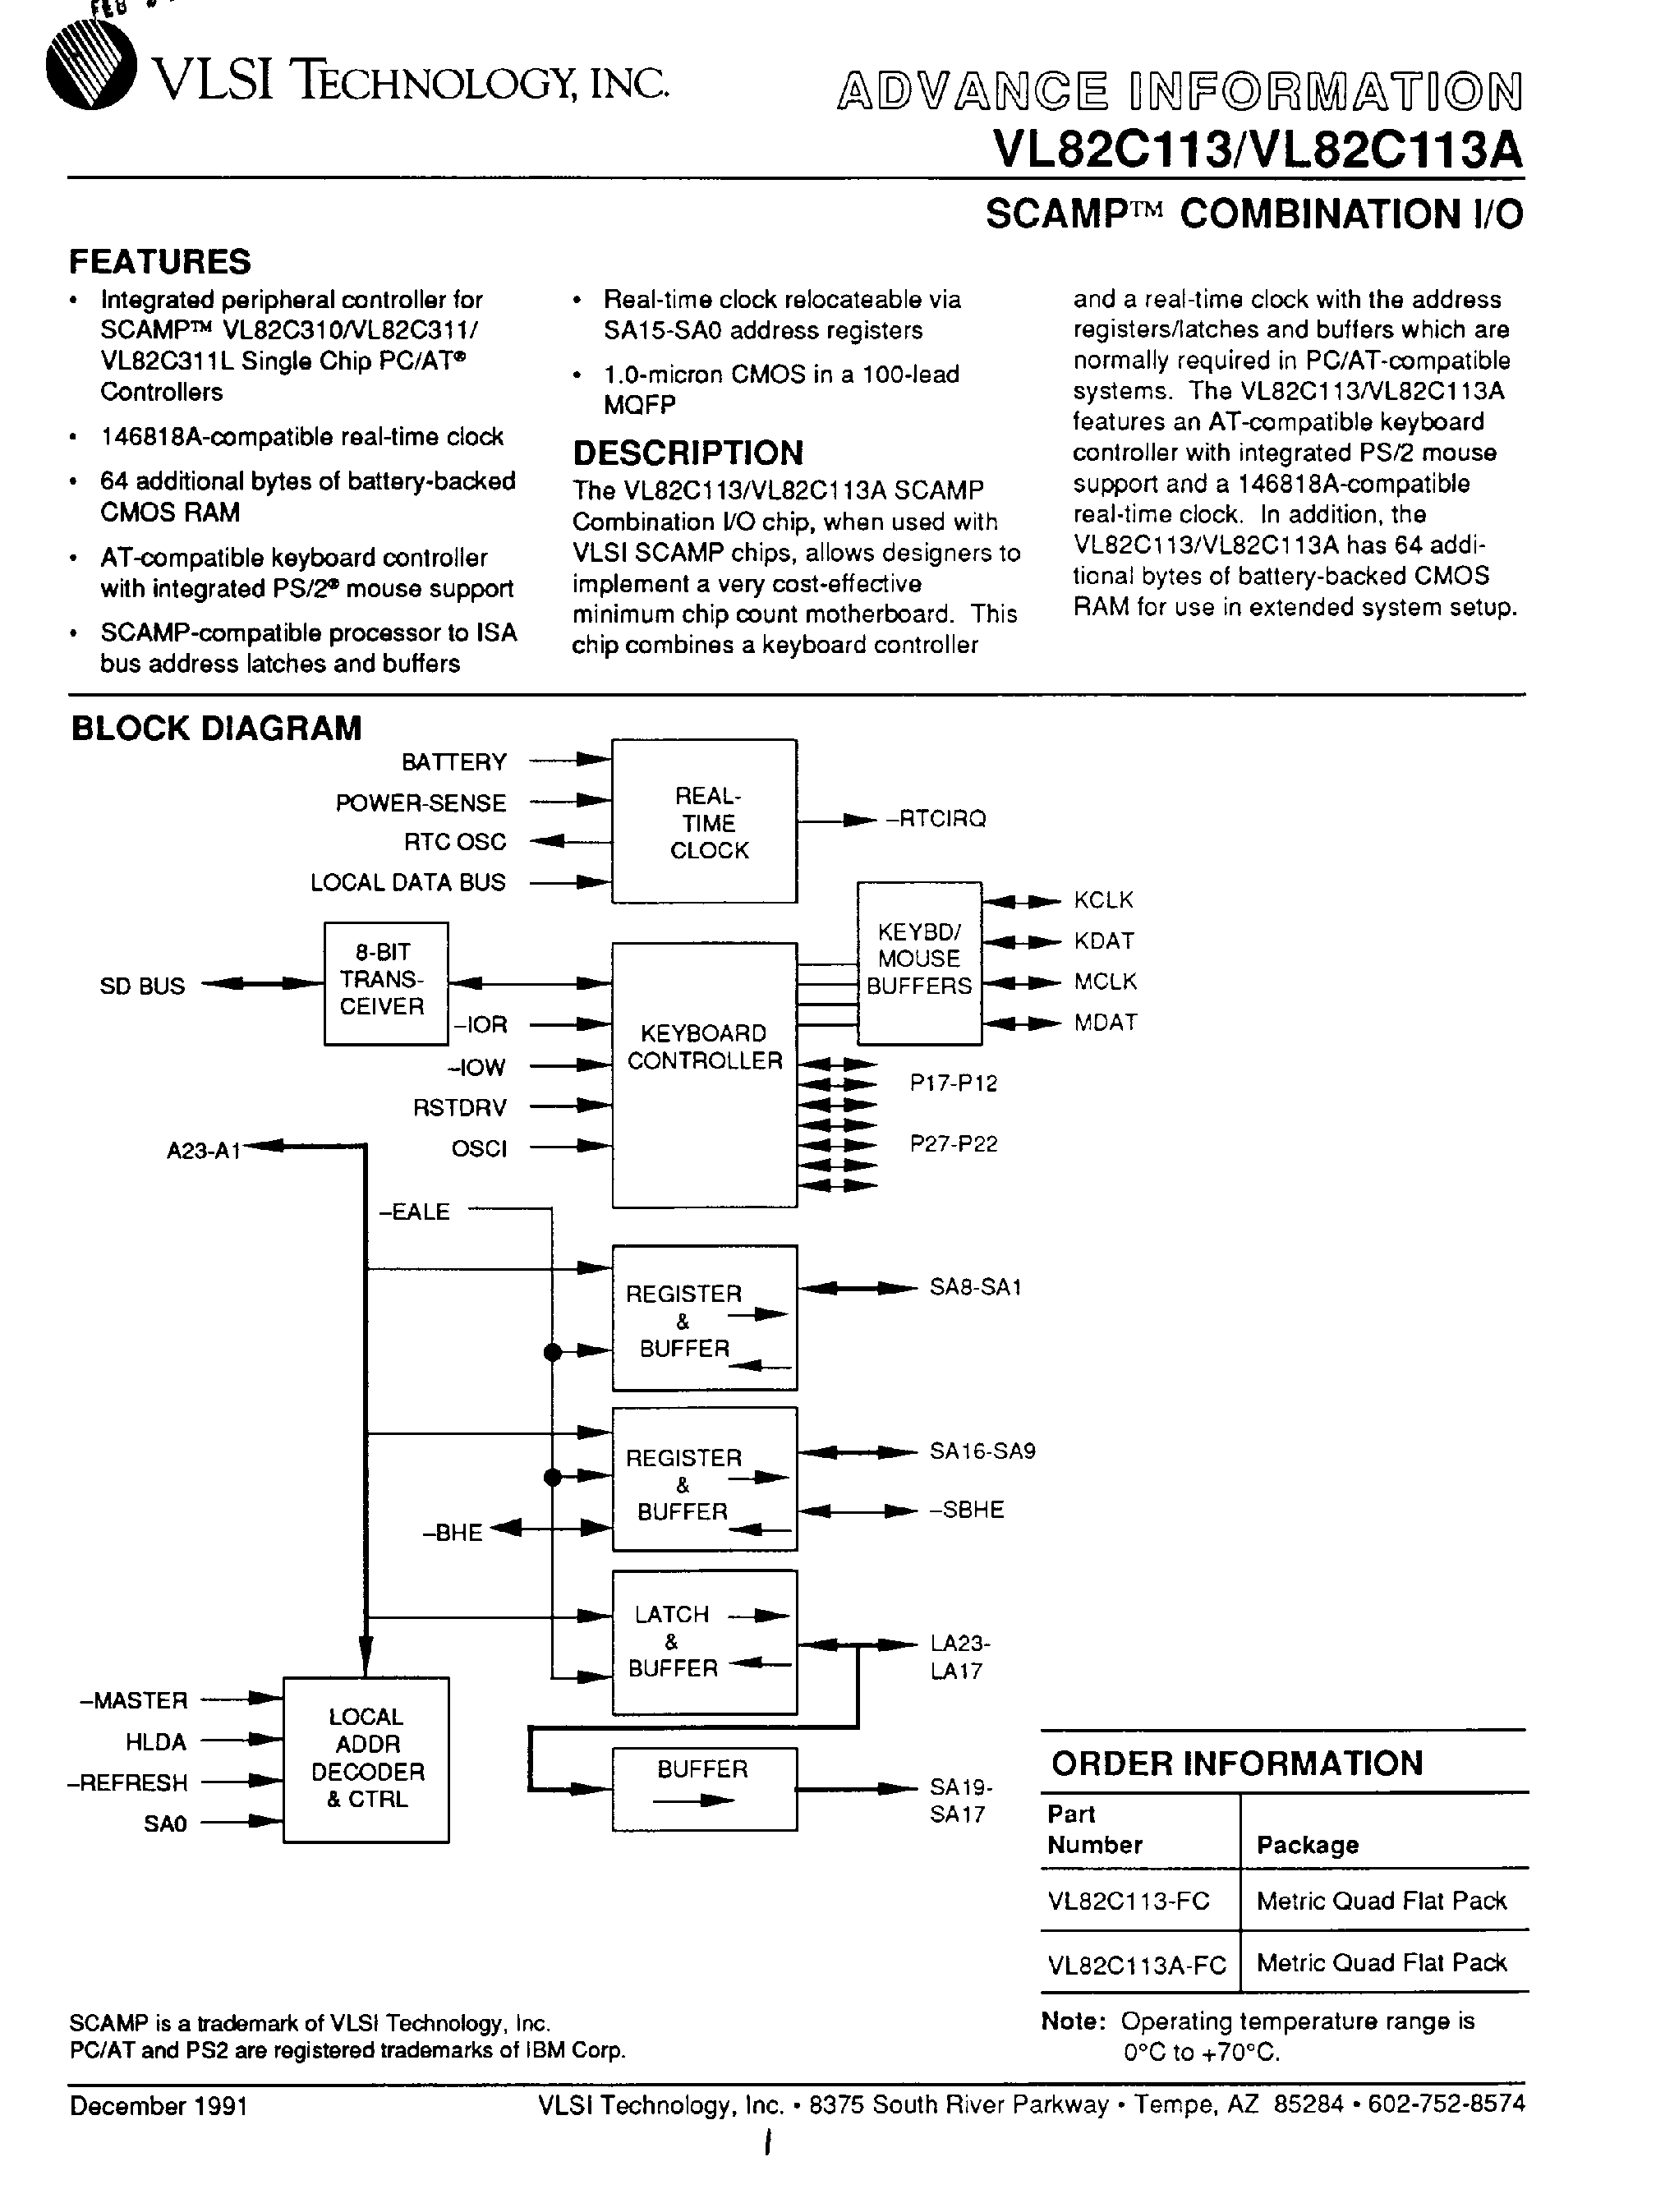 Даташит VL82C113A - SCAMP Combination I/O страница 1